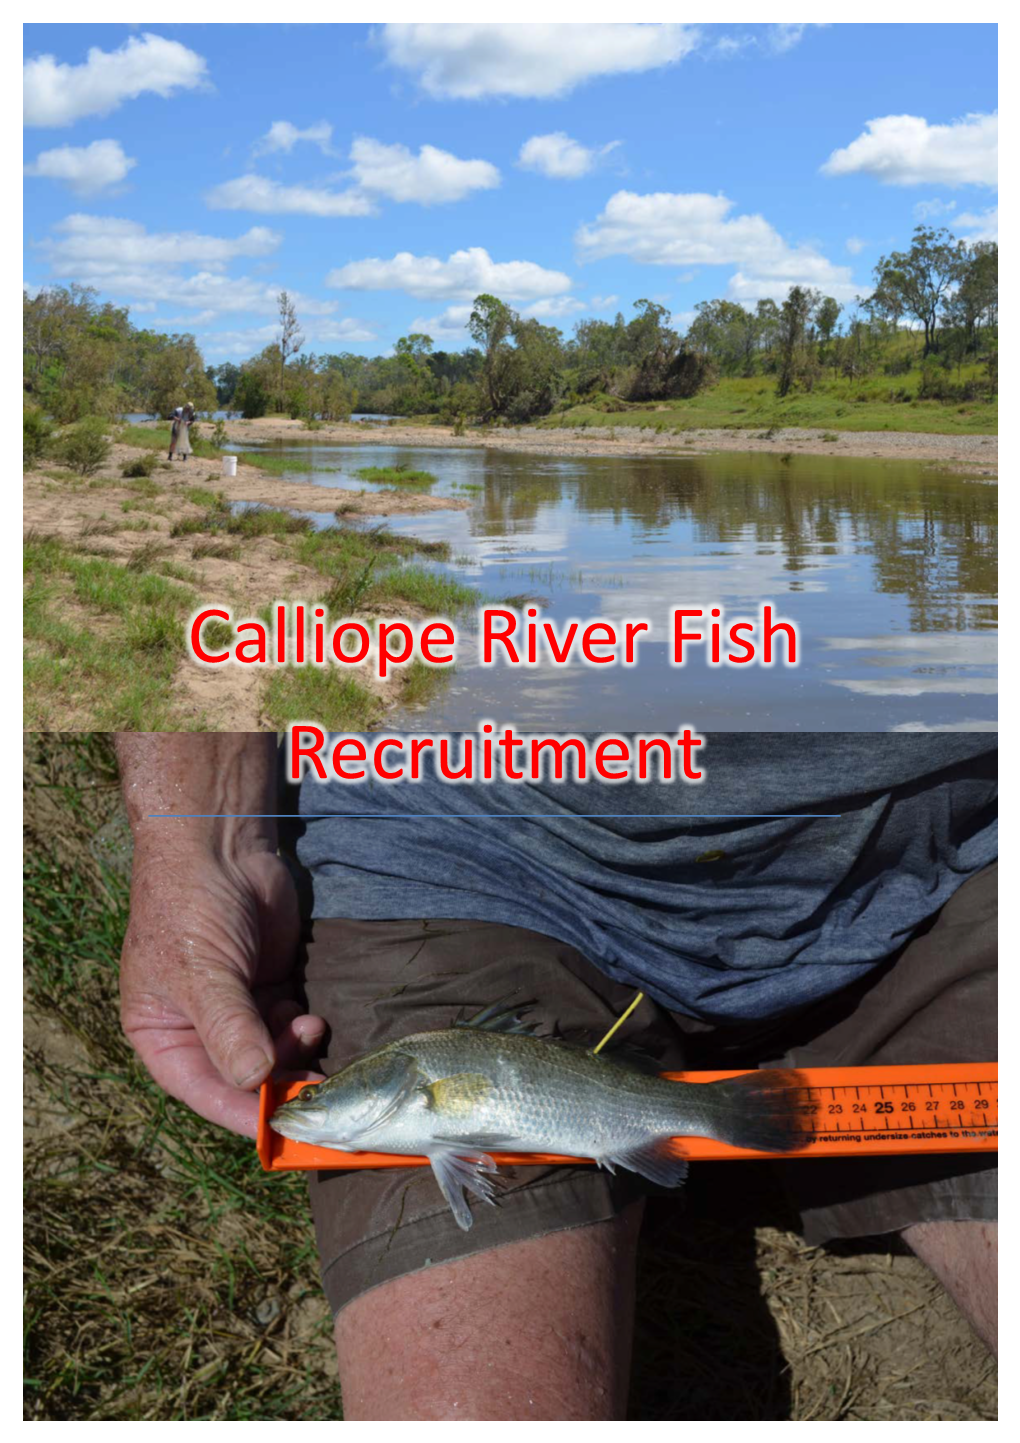 Calliope River Fish Recruitment